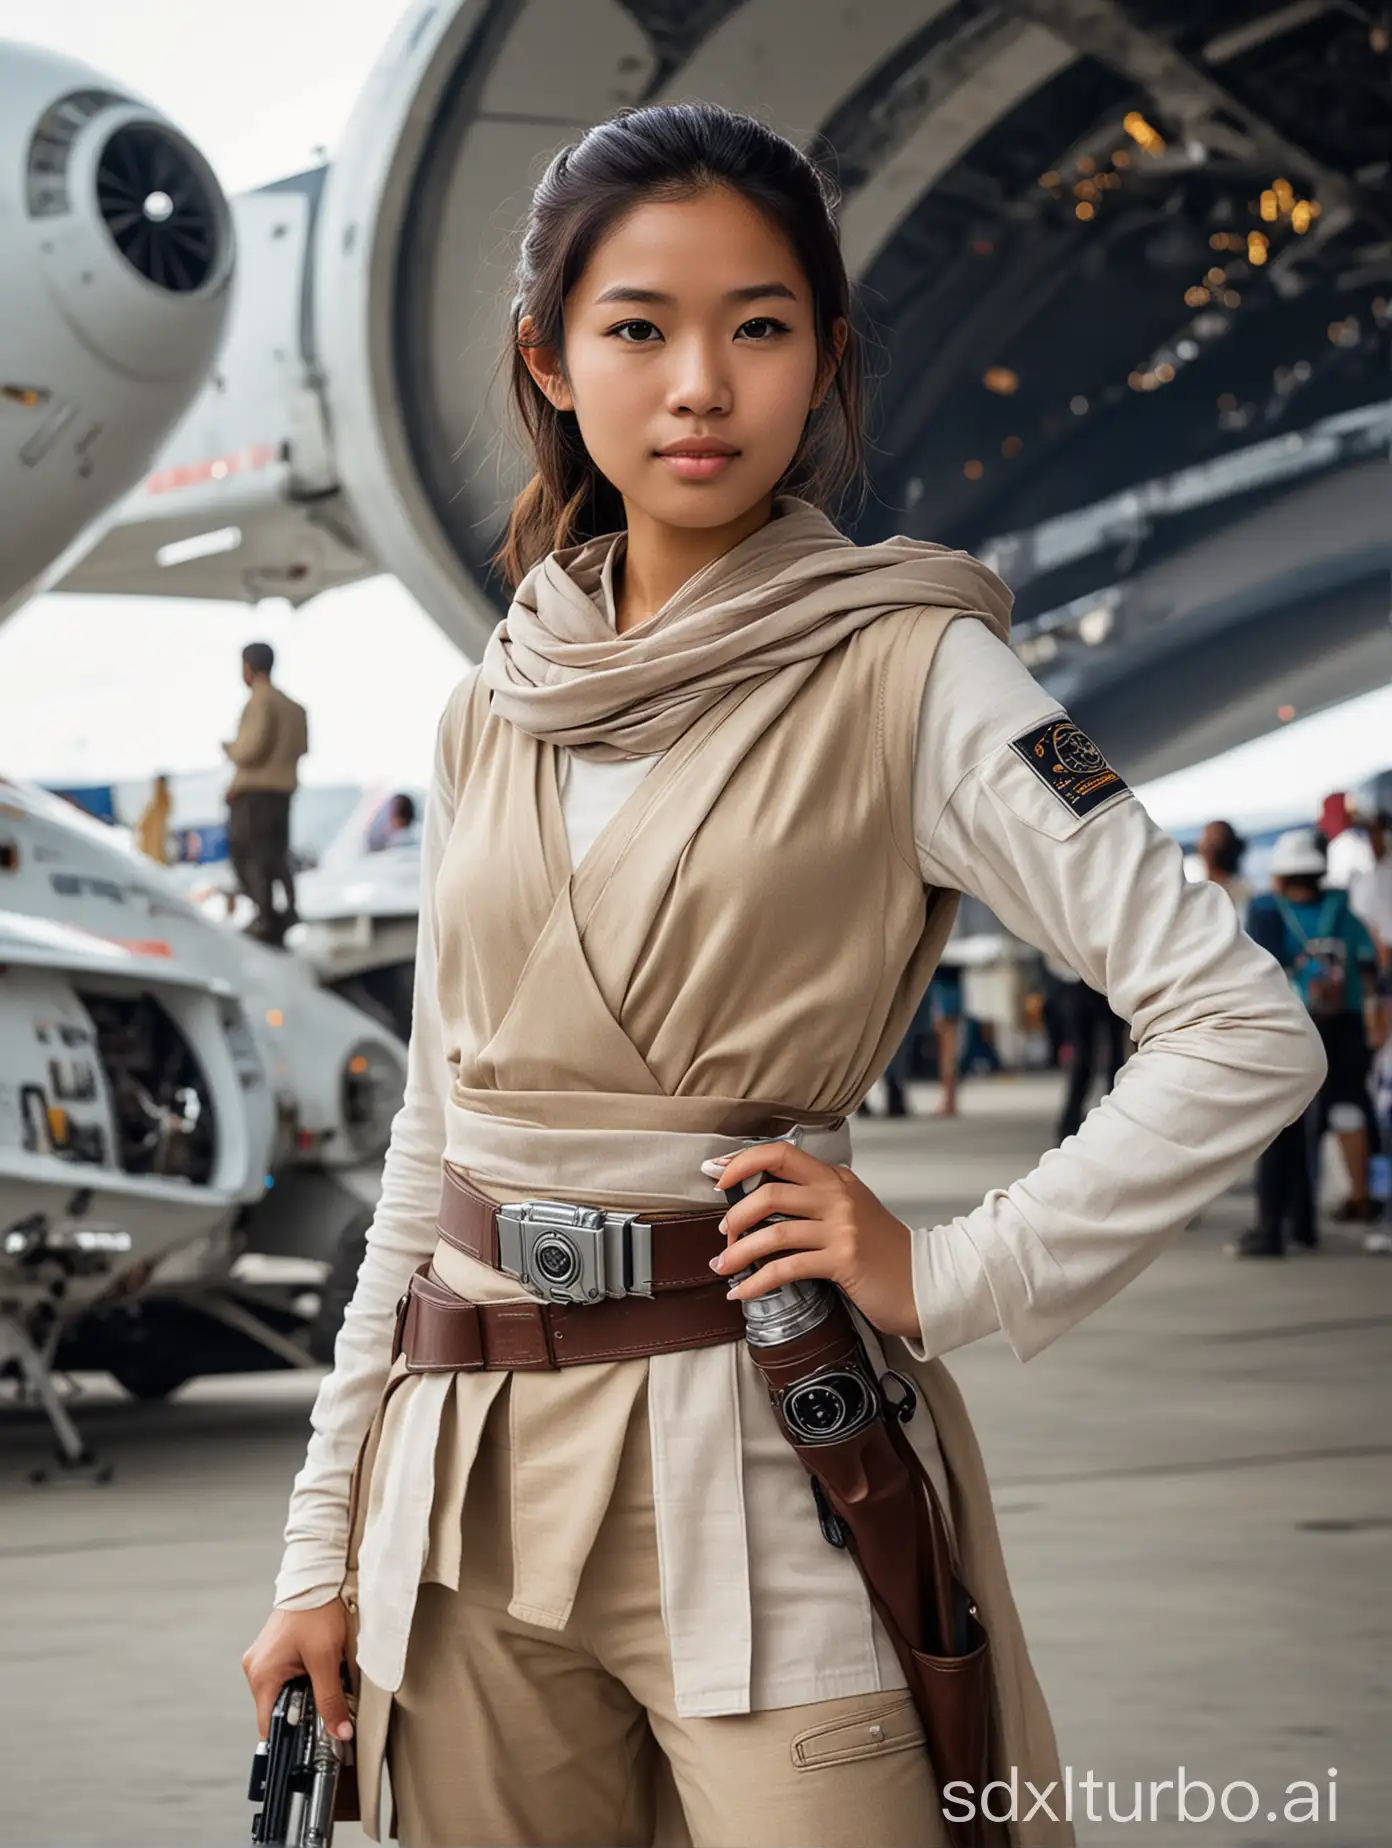 Teenage-Jedi-Girl-at-Southeast-Asian-Spaceport